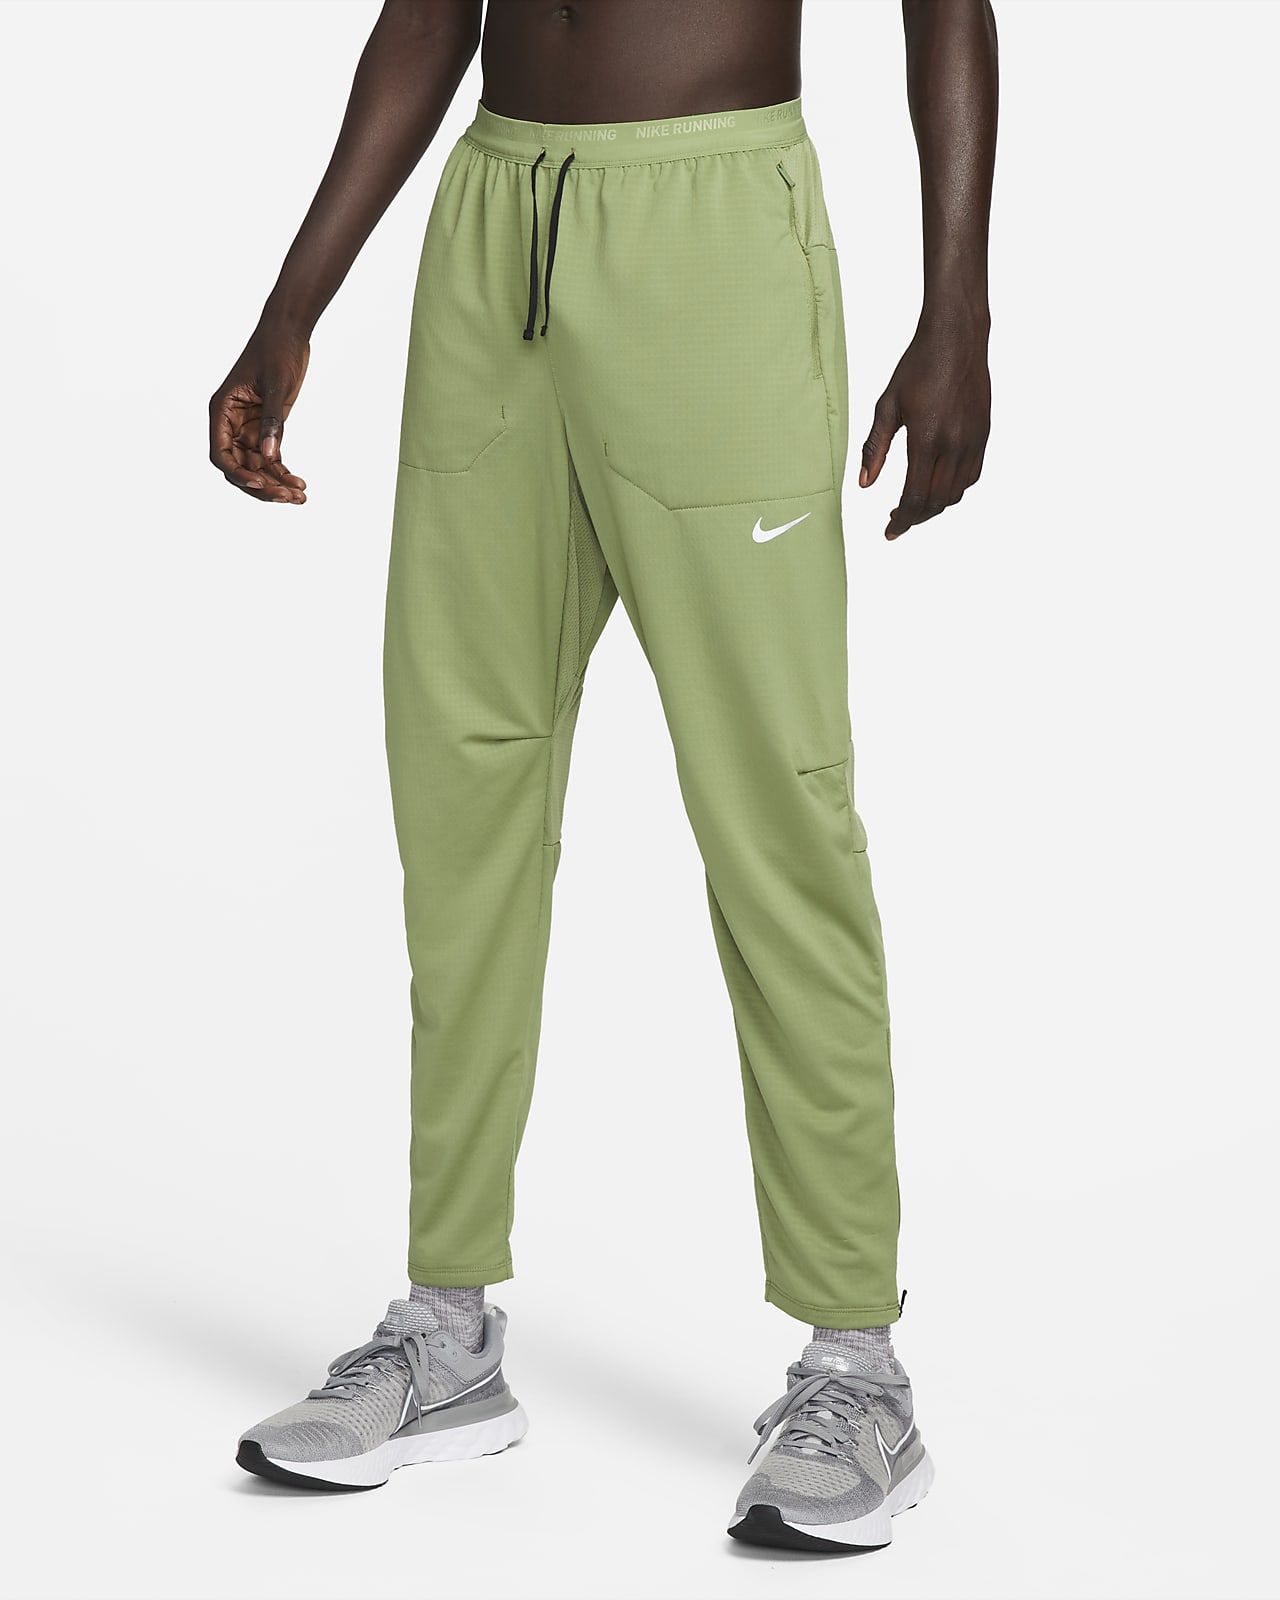 Clemson Nike Dri-Fit Sweat Pants : NARP Clothing